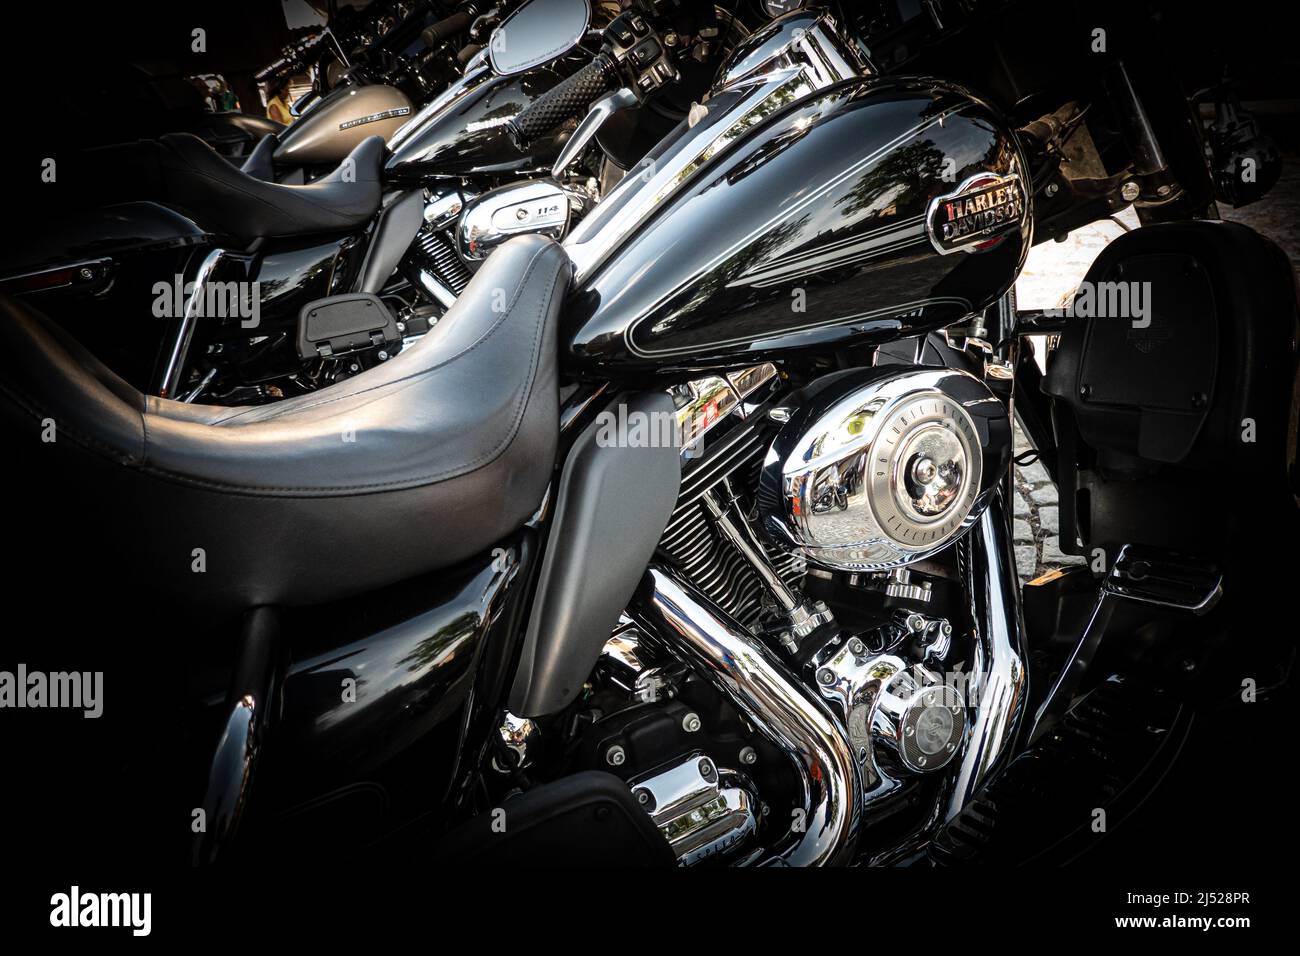 Harley davidson details Stock Photo - Alamy